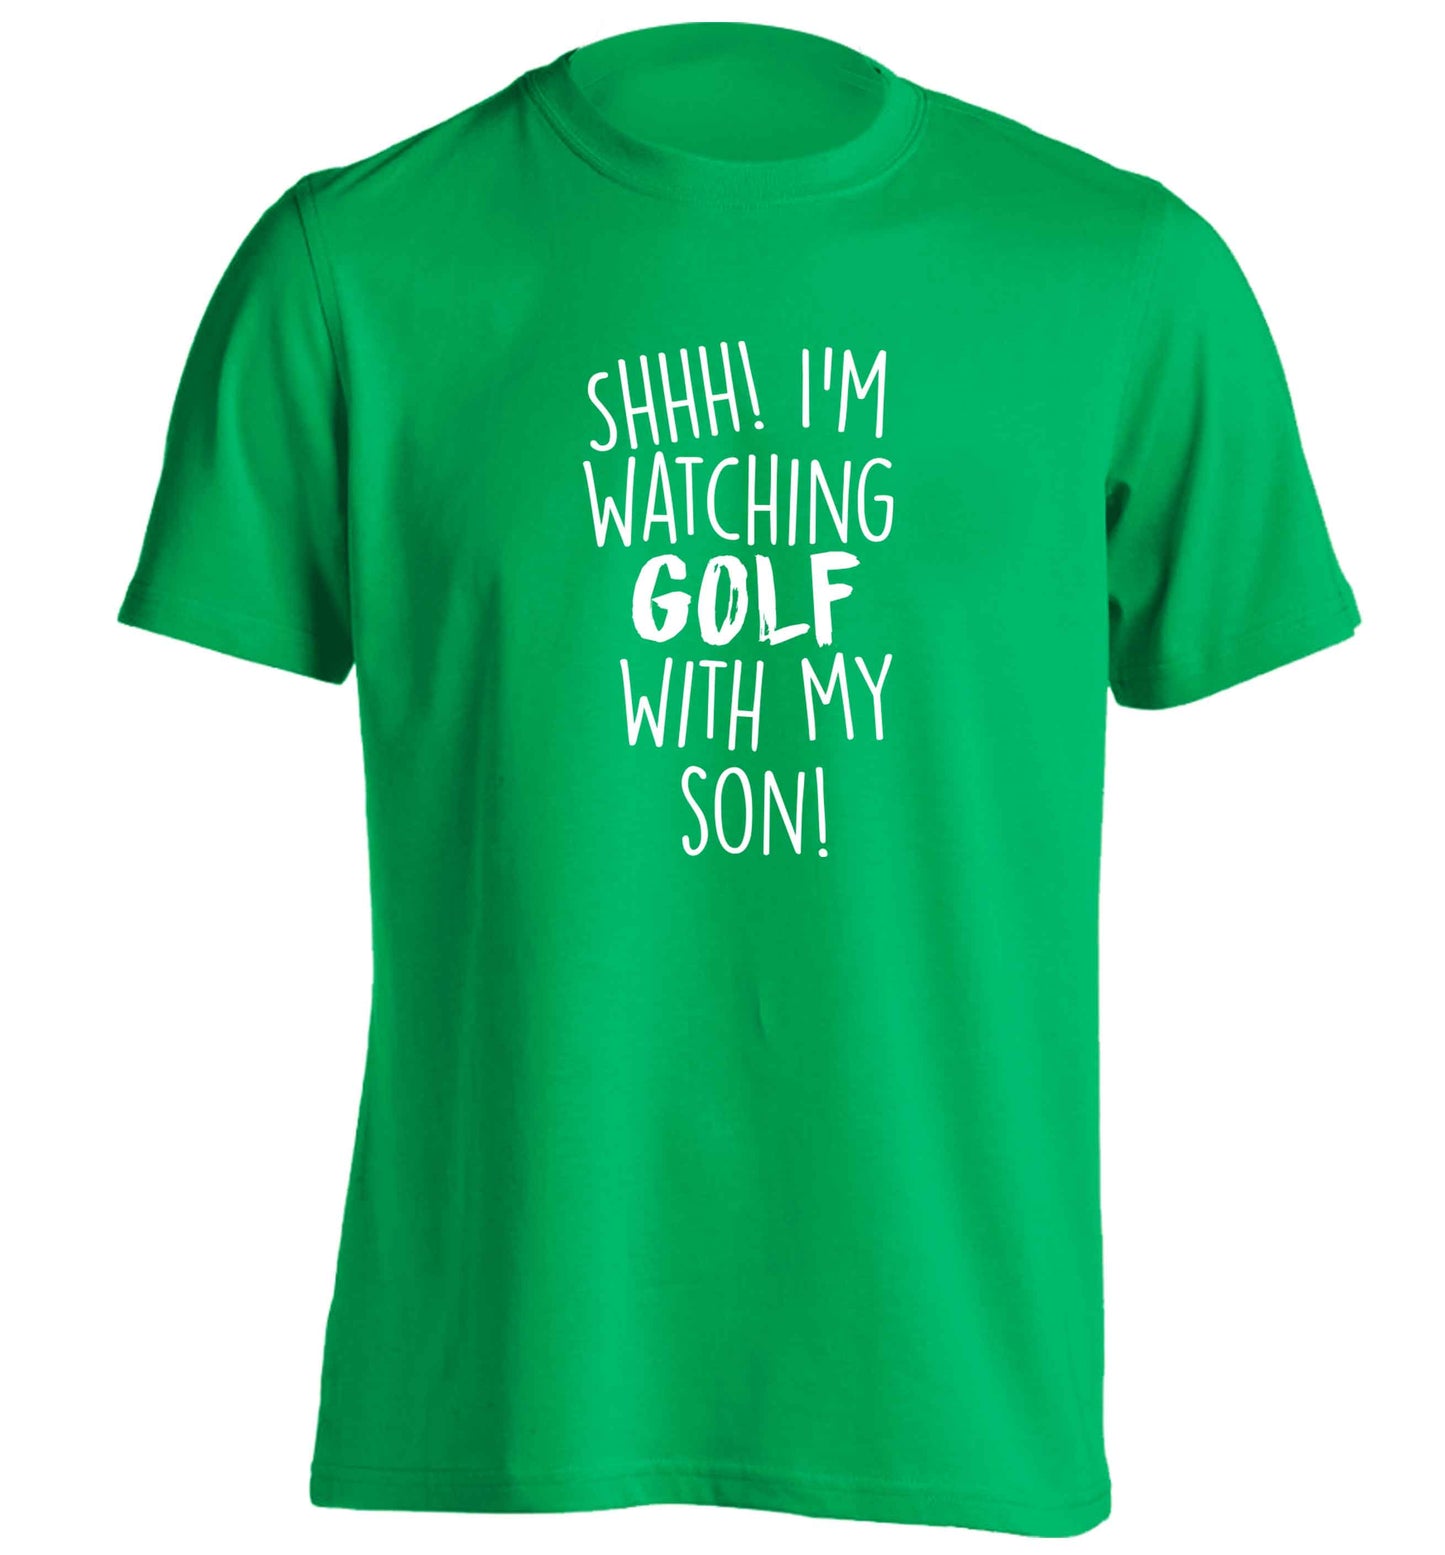 Shh I'm watching golf with my son adults unisex green Tshirt 2XL